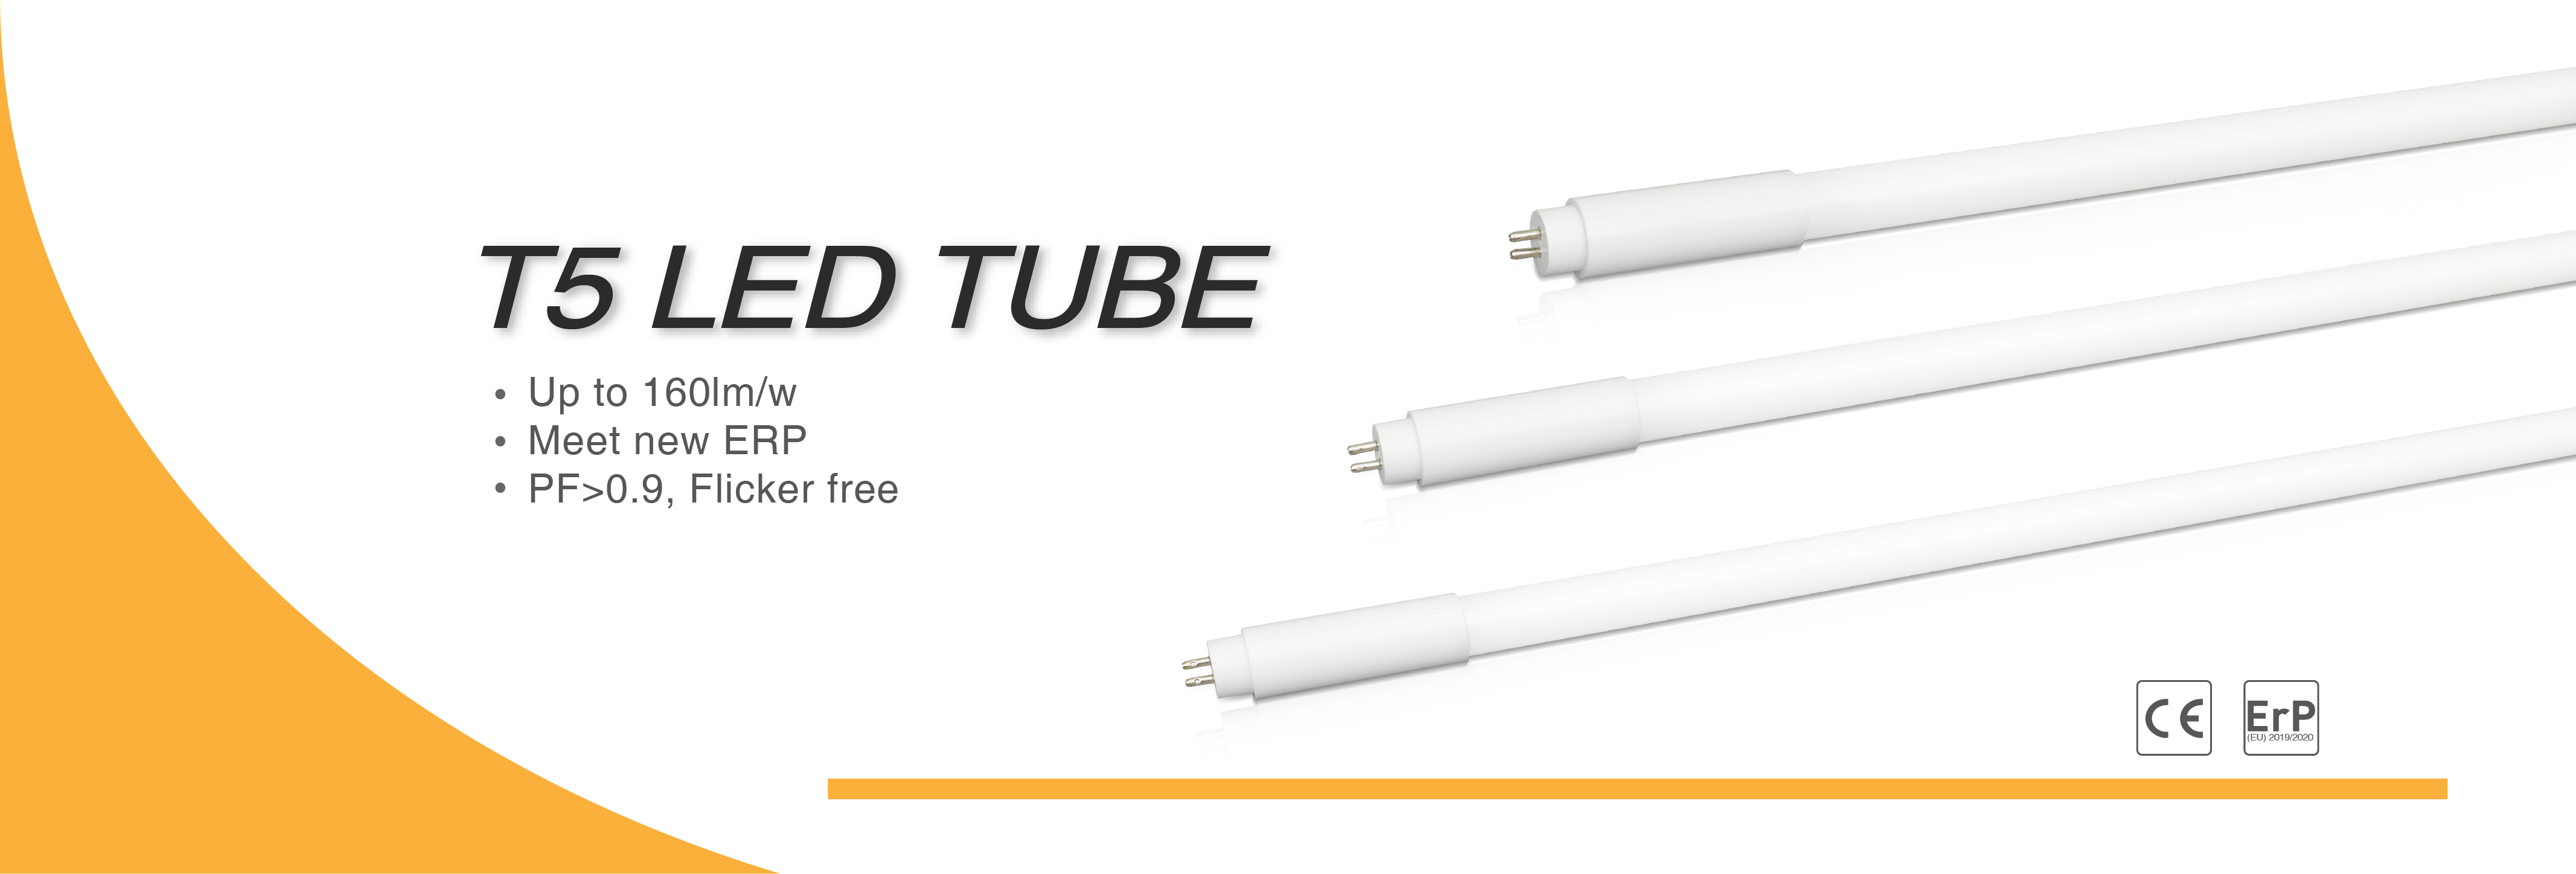 t5 led tube warm white